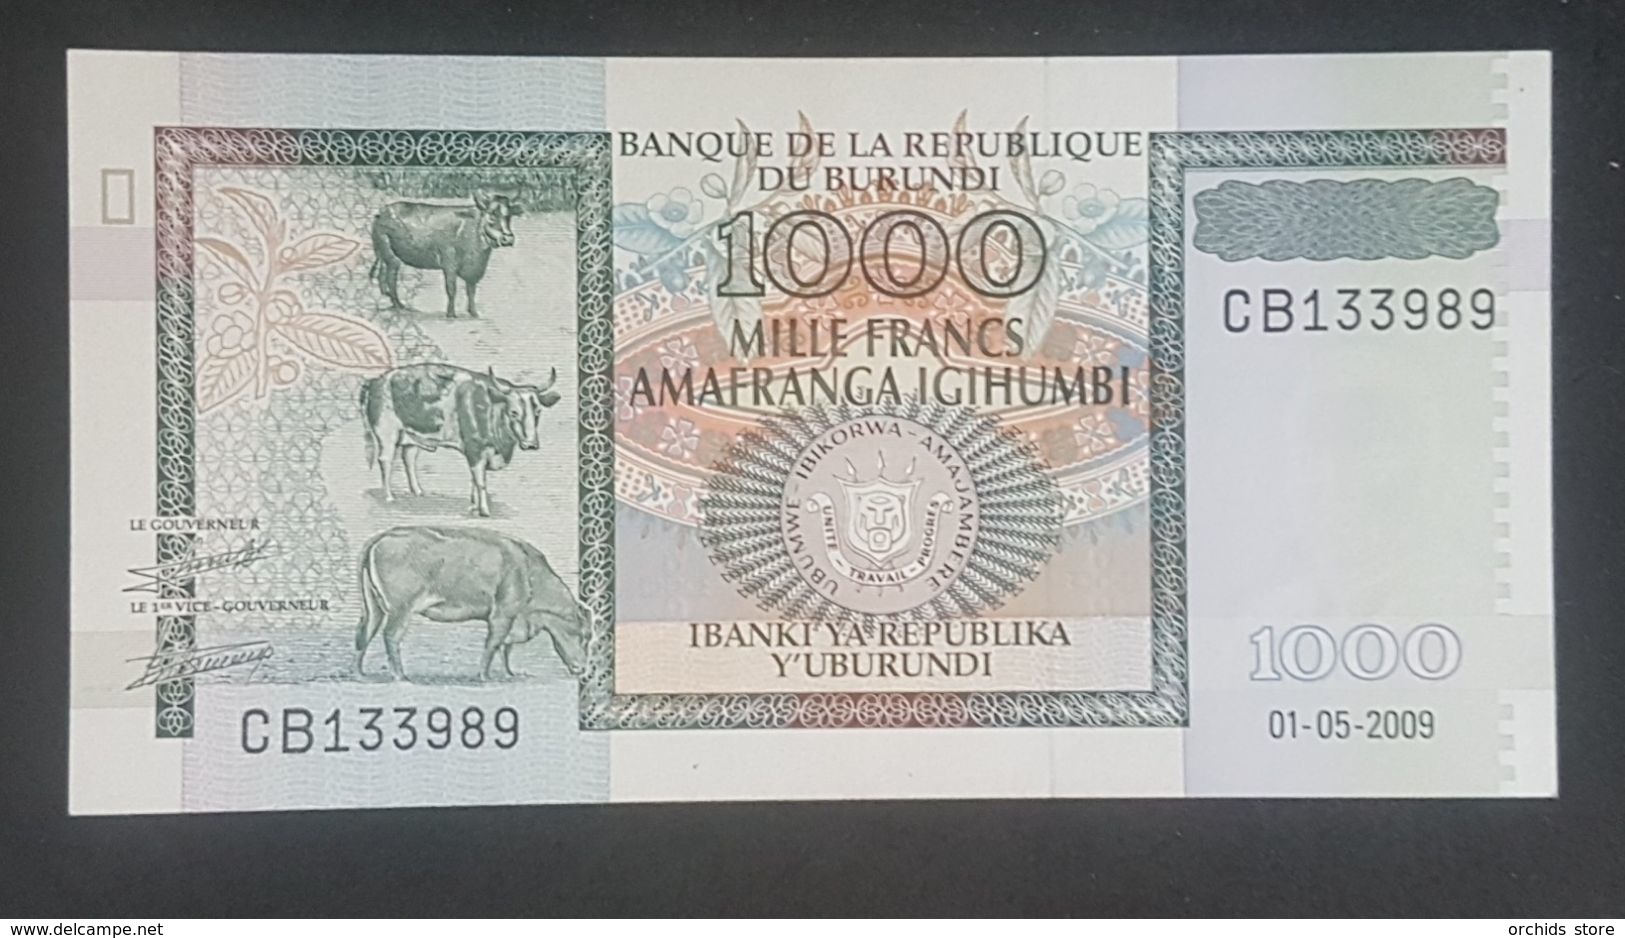 RS - Burundi 1000 Francs Banknote 2009 UNC #CB33989 - Burundi